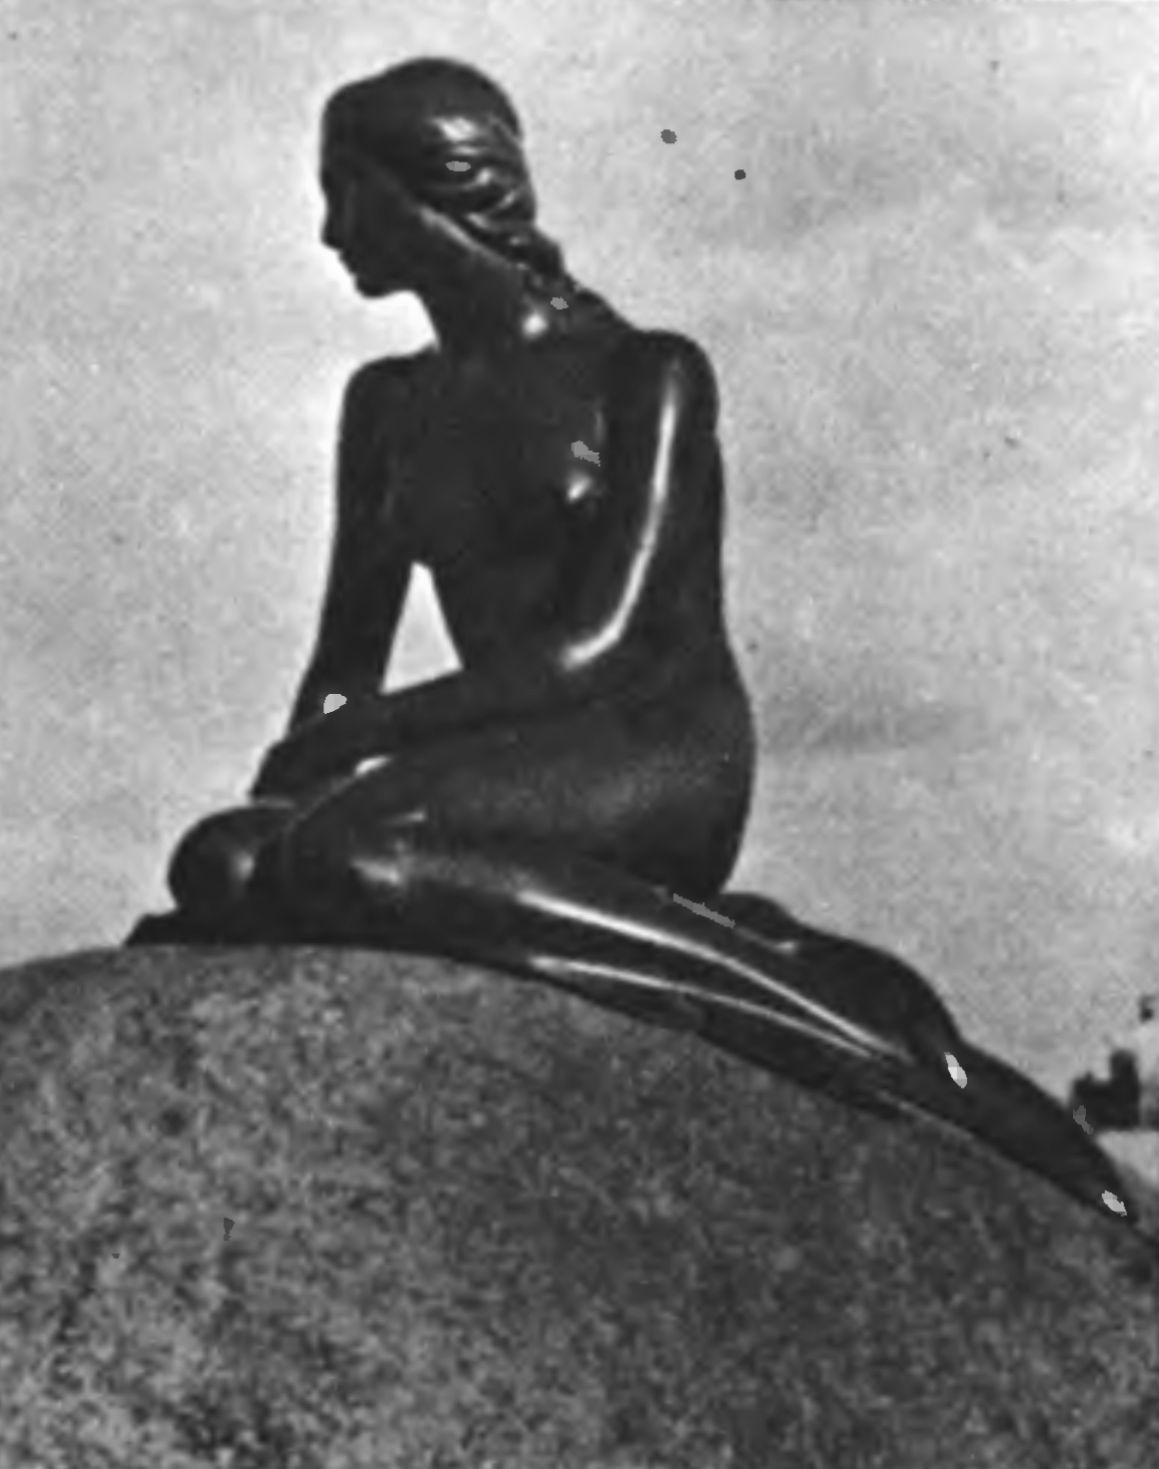 Русалочка. Фотография. Скульптура работы Э. Эриксена. Копенгаген. 1913